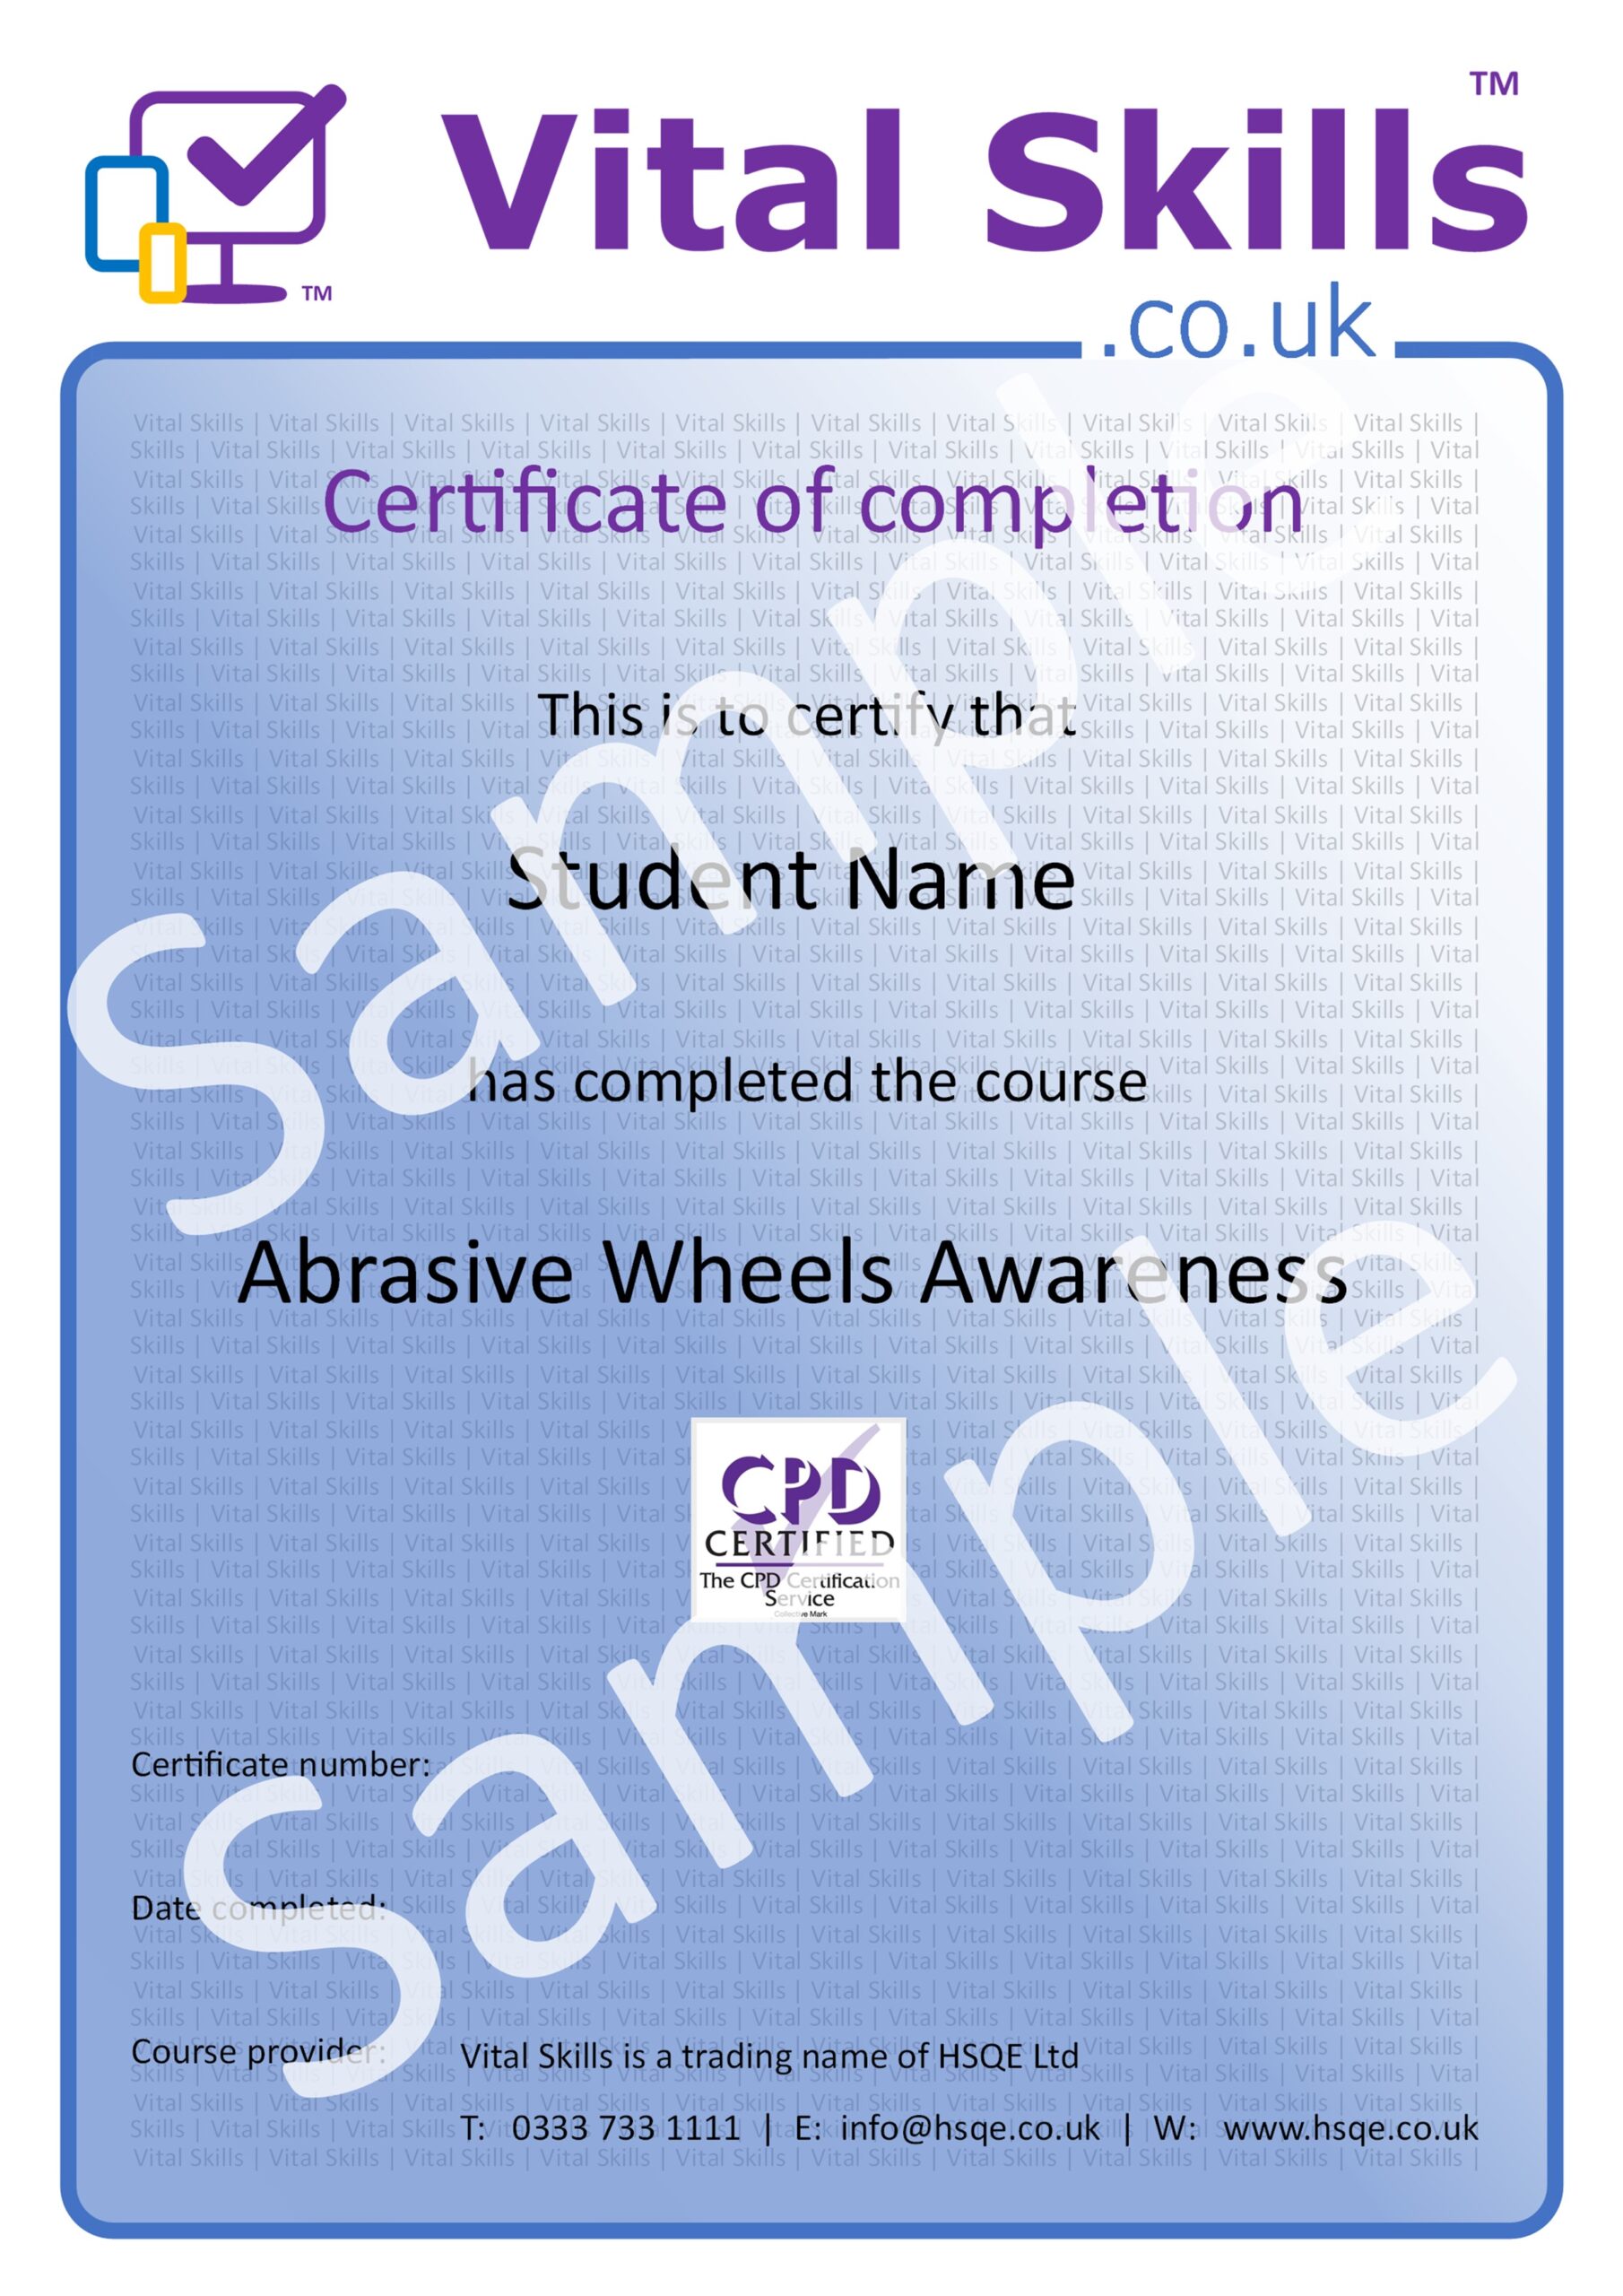 Abrasive Wheels Awareness Online Training Course Certificate HSQE Vital Skills